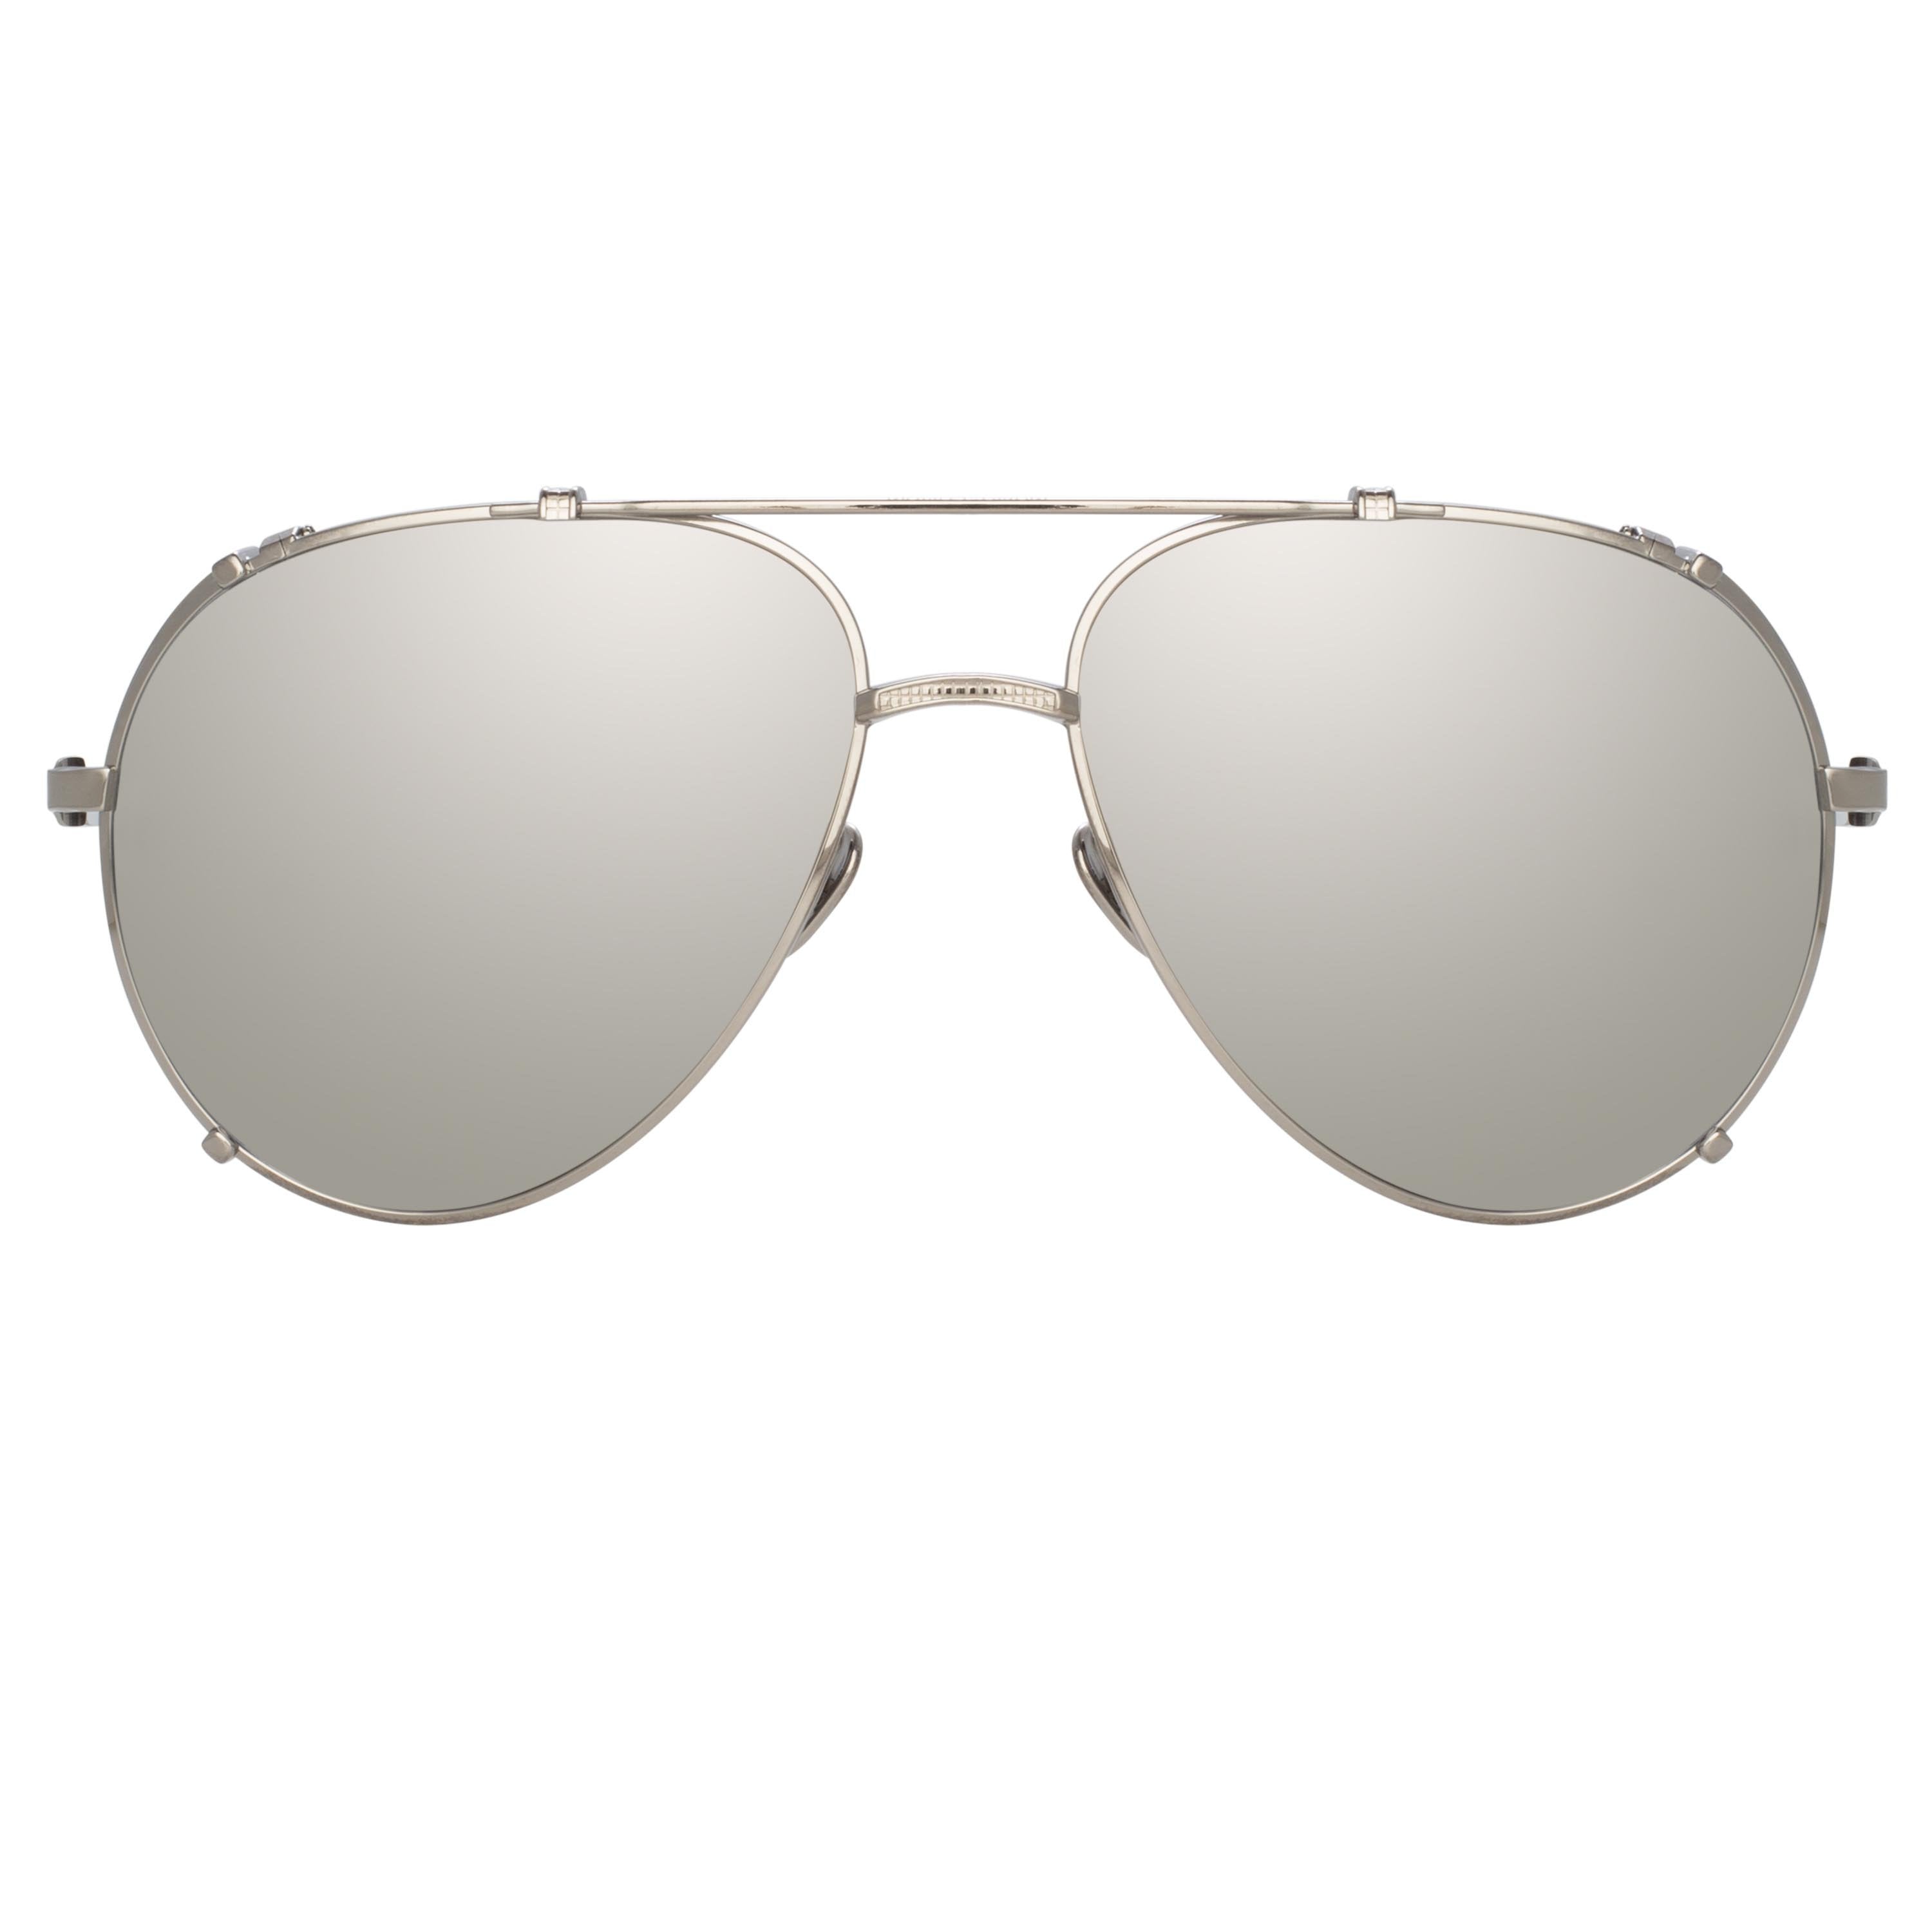 Newman Aviator Sunglasses in White Gold